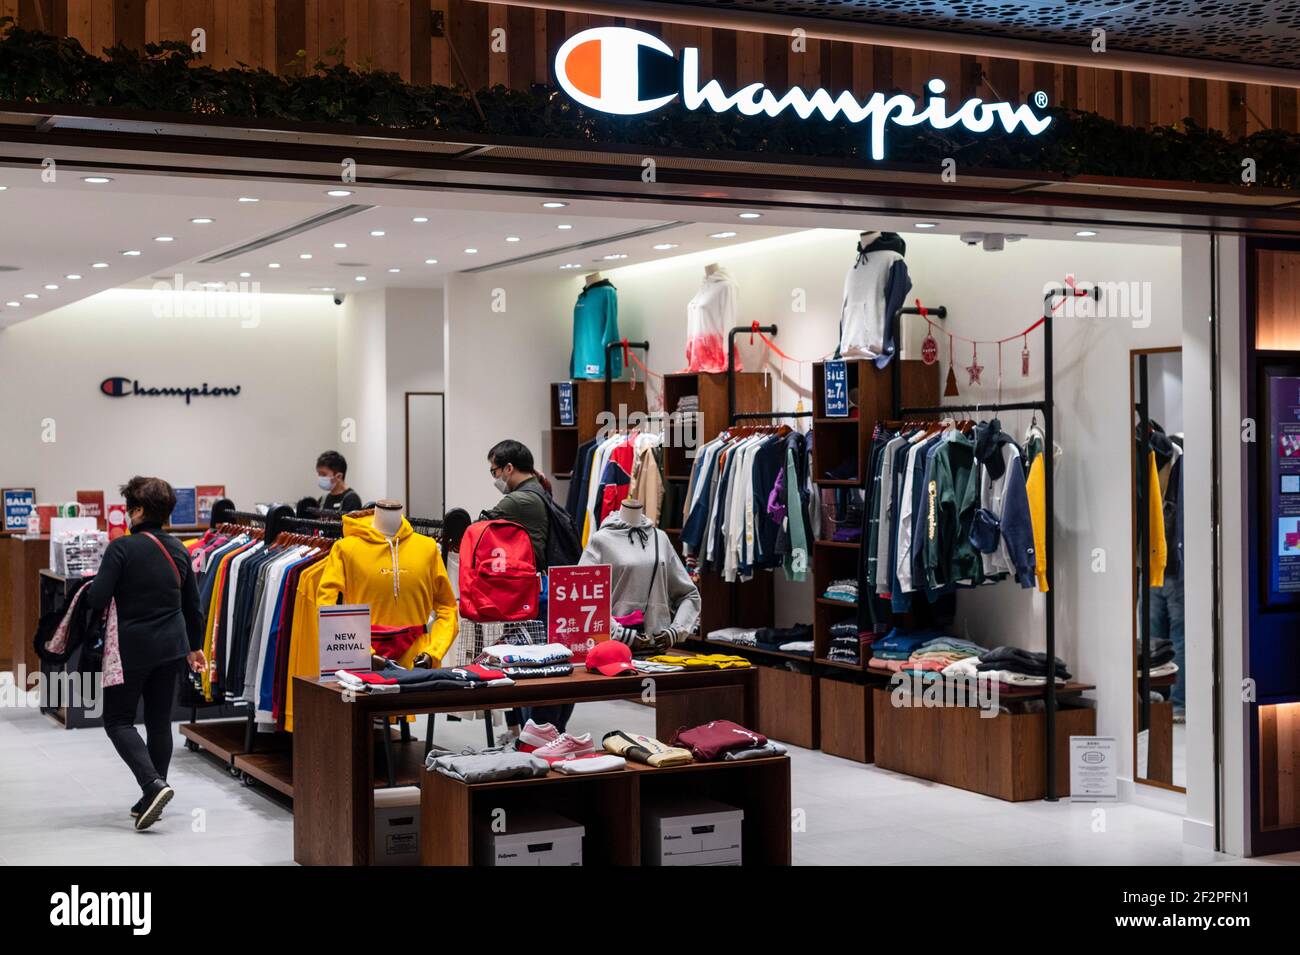 Champion brand hi-res images - Alamy